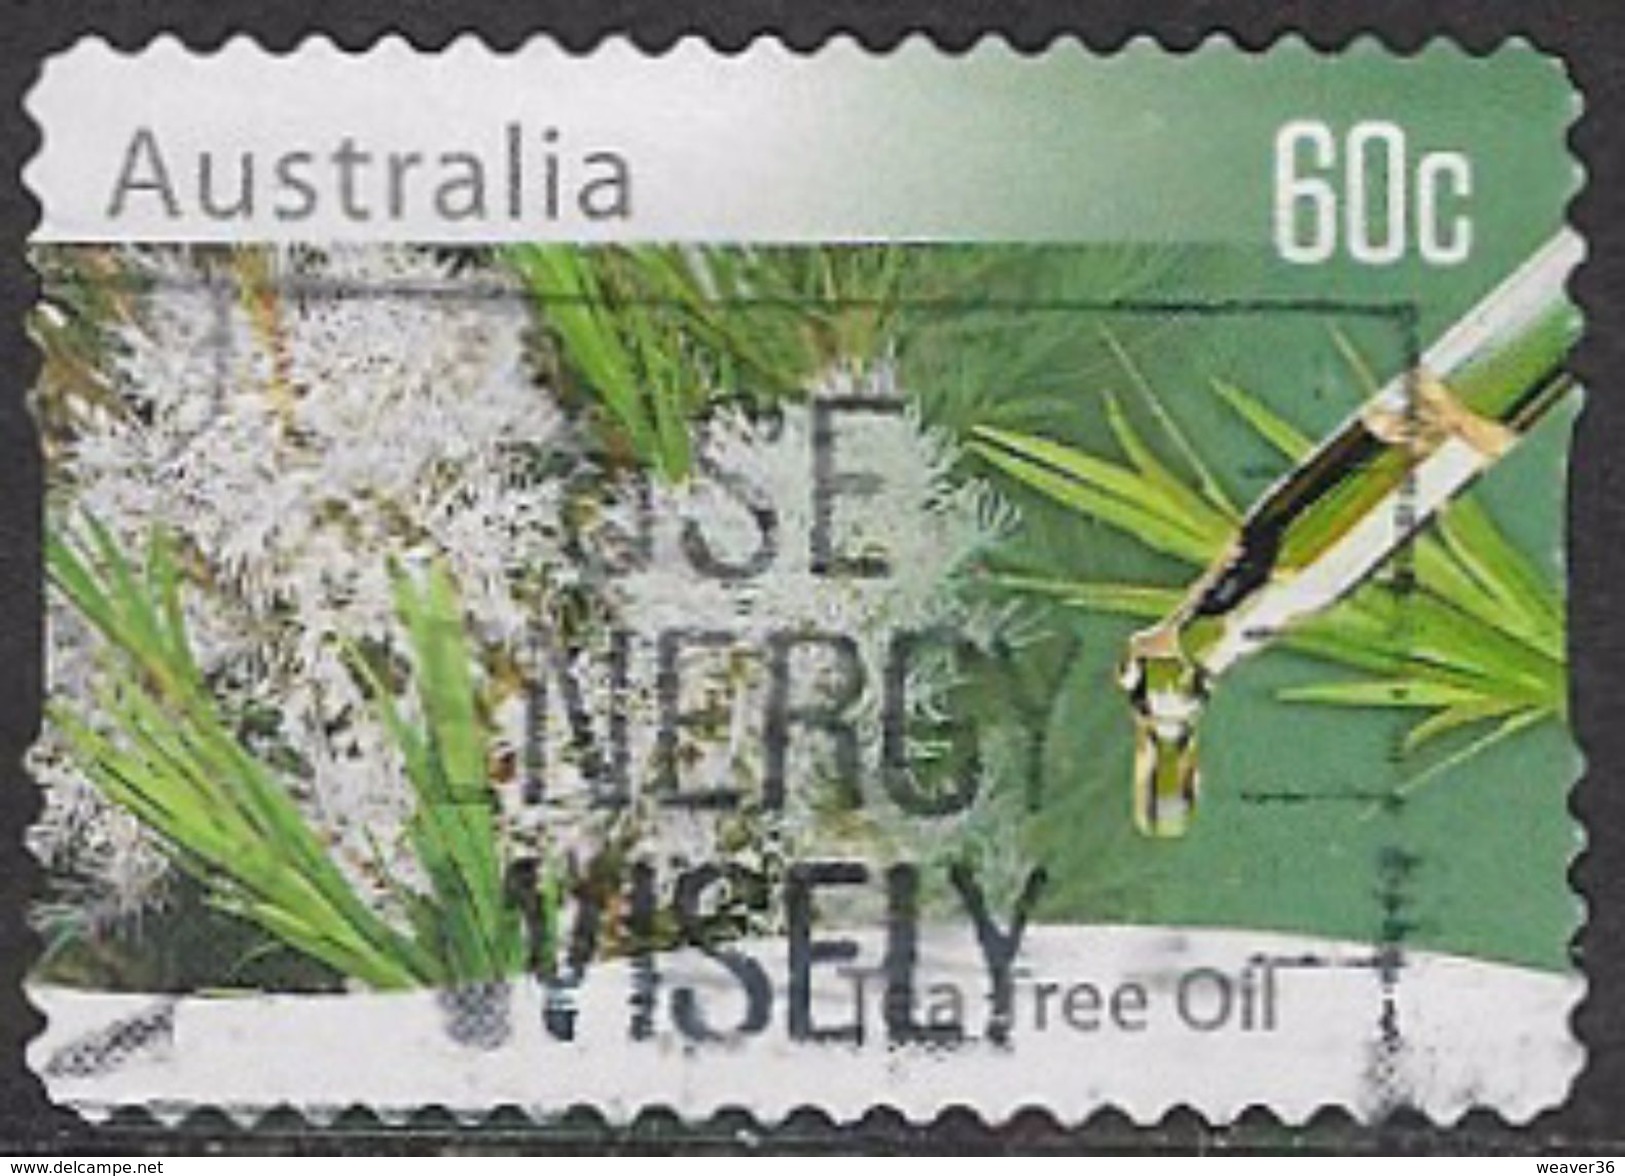 Australia 2011 Flora 60c Type 4 Self Adhesive Good/fine Used [34/29074/ND] - Used Stamps